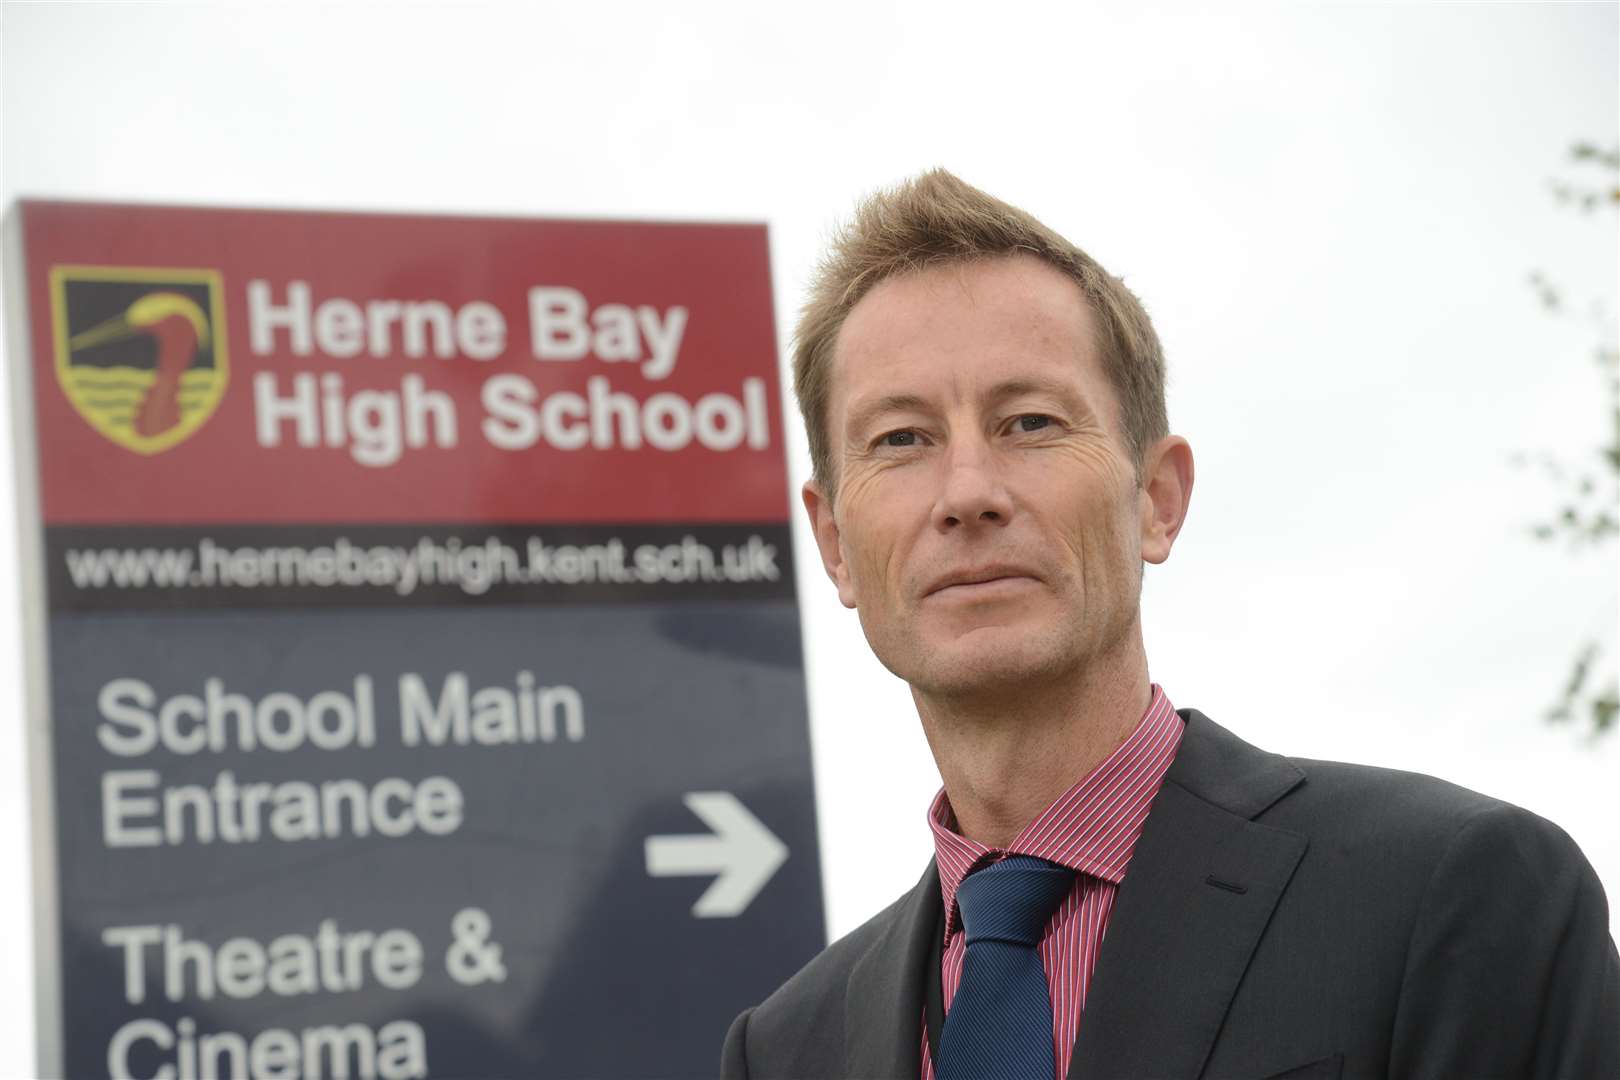 Herne Bay High School principal Jon Boyes